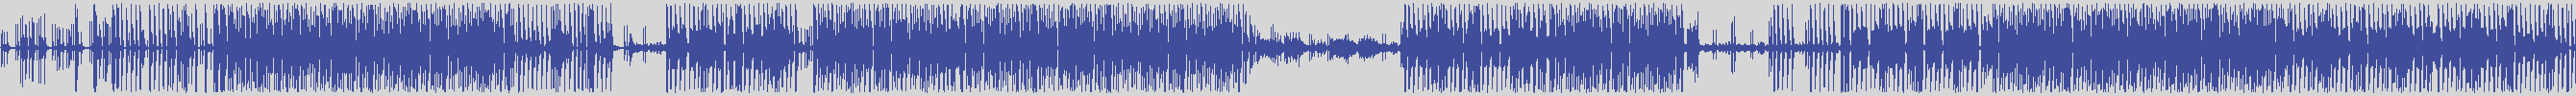 nf_boyz_records [NFY041] Mo, Jay - Noiem [Original Mix] audio wave form